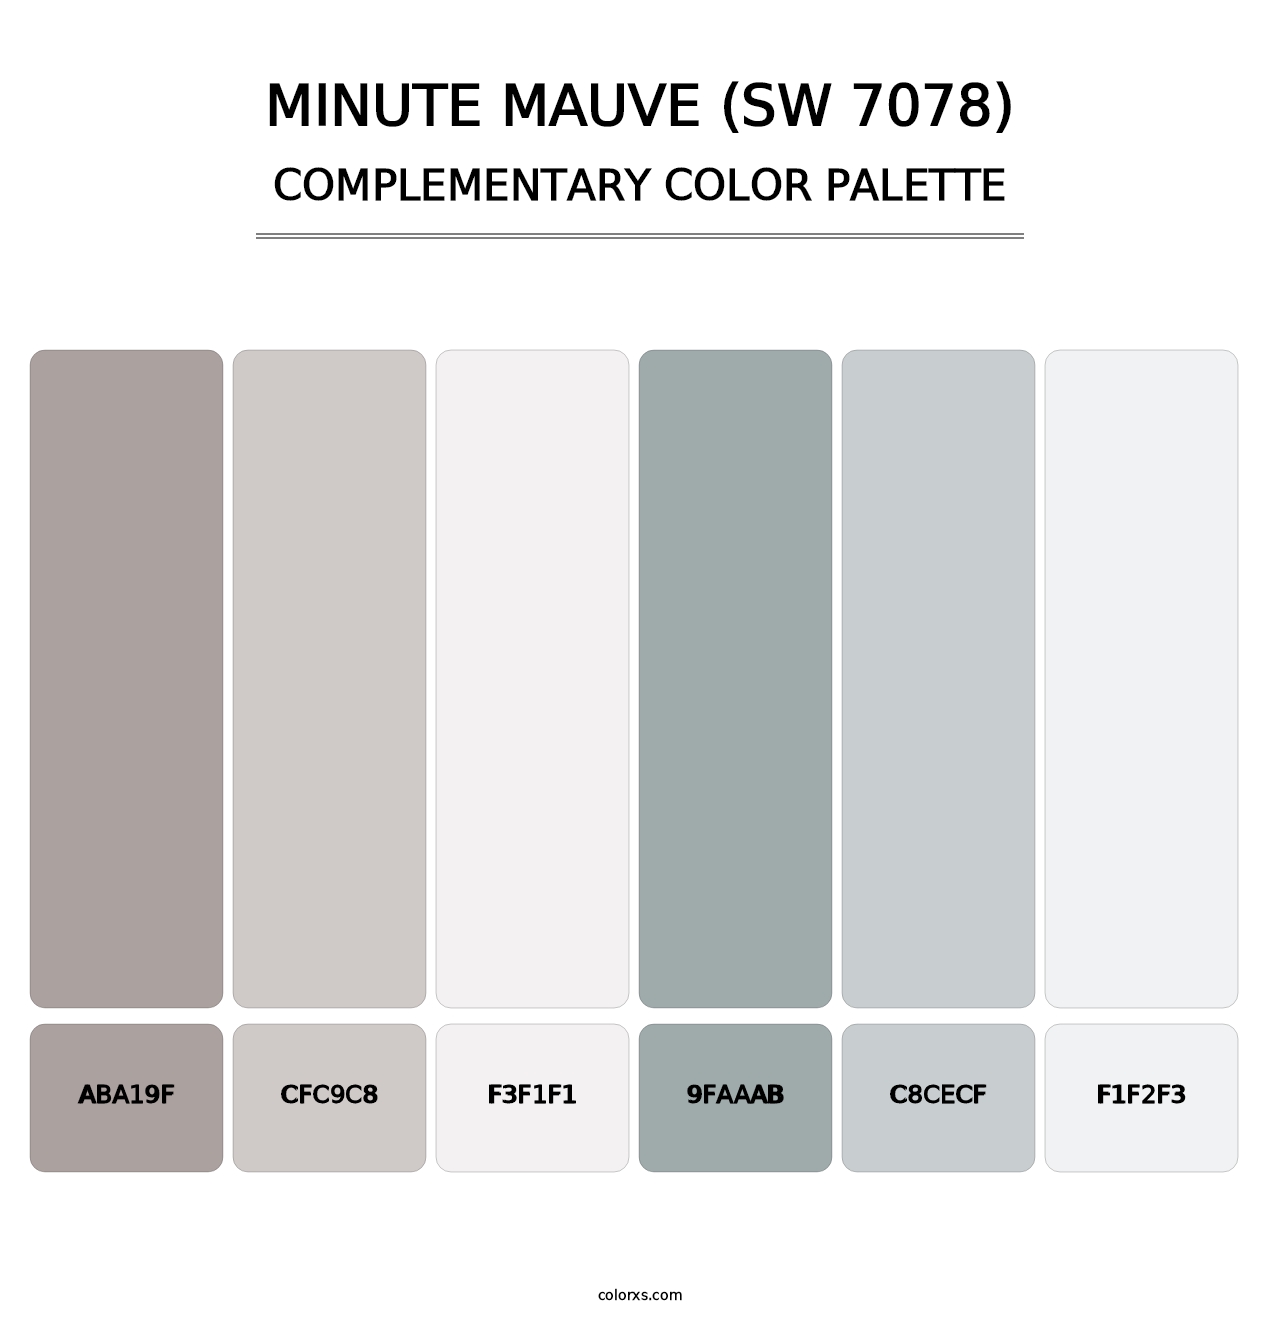 Minute Mauve (SW 7078) - Complementary Color Palette